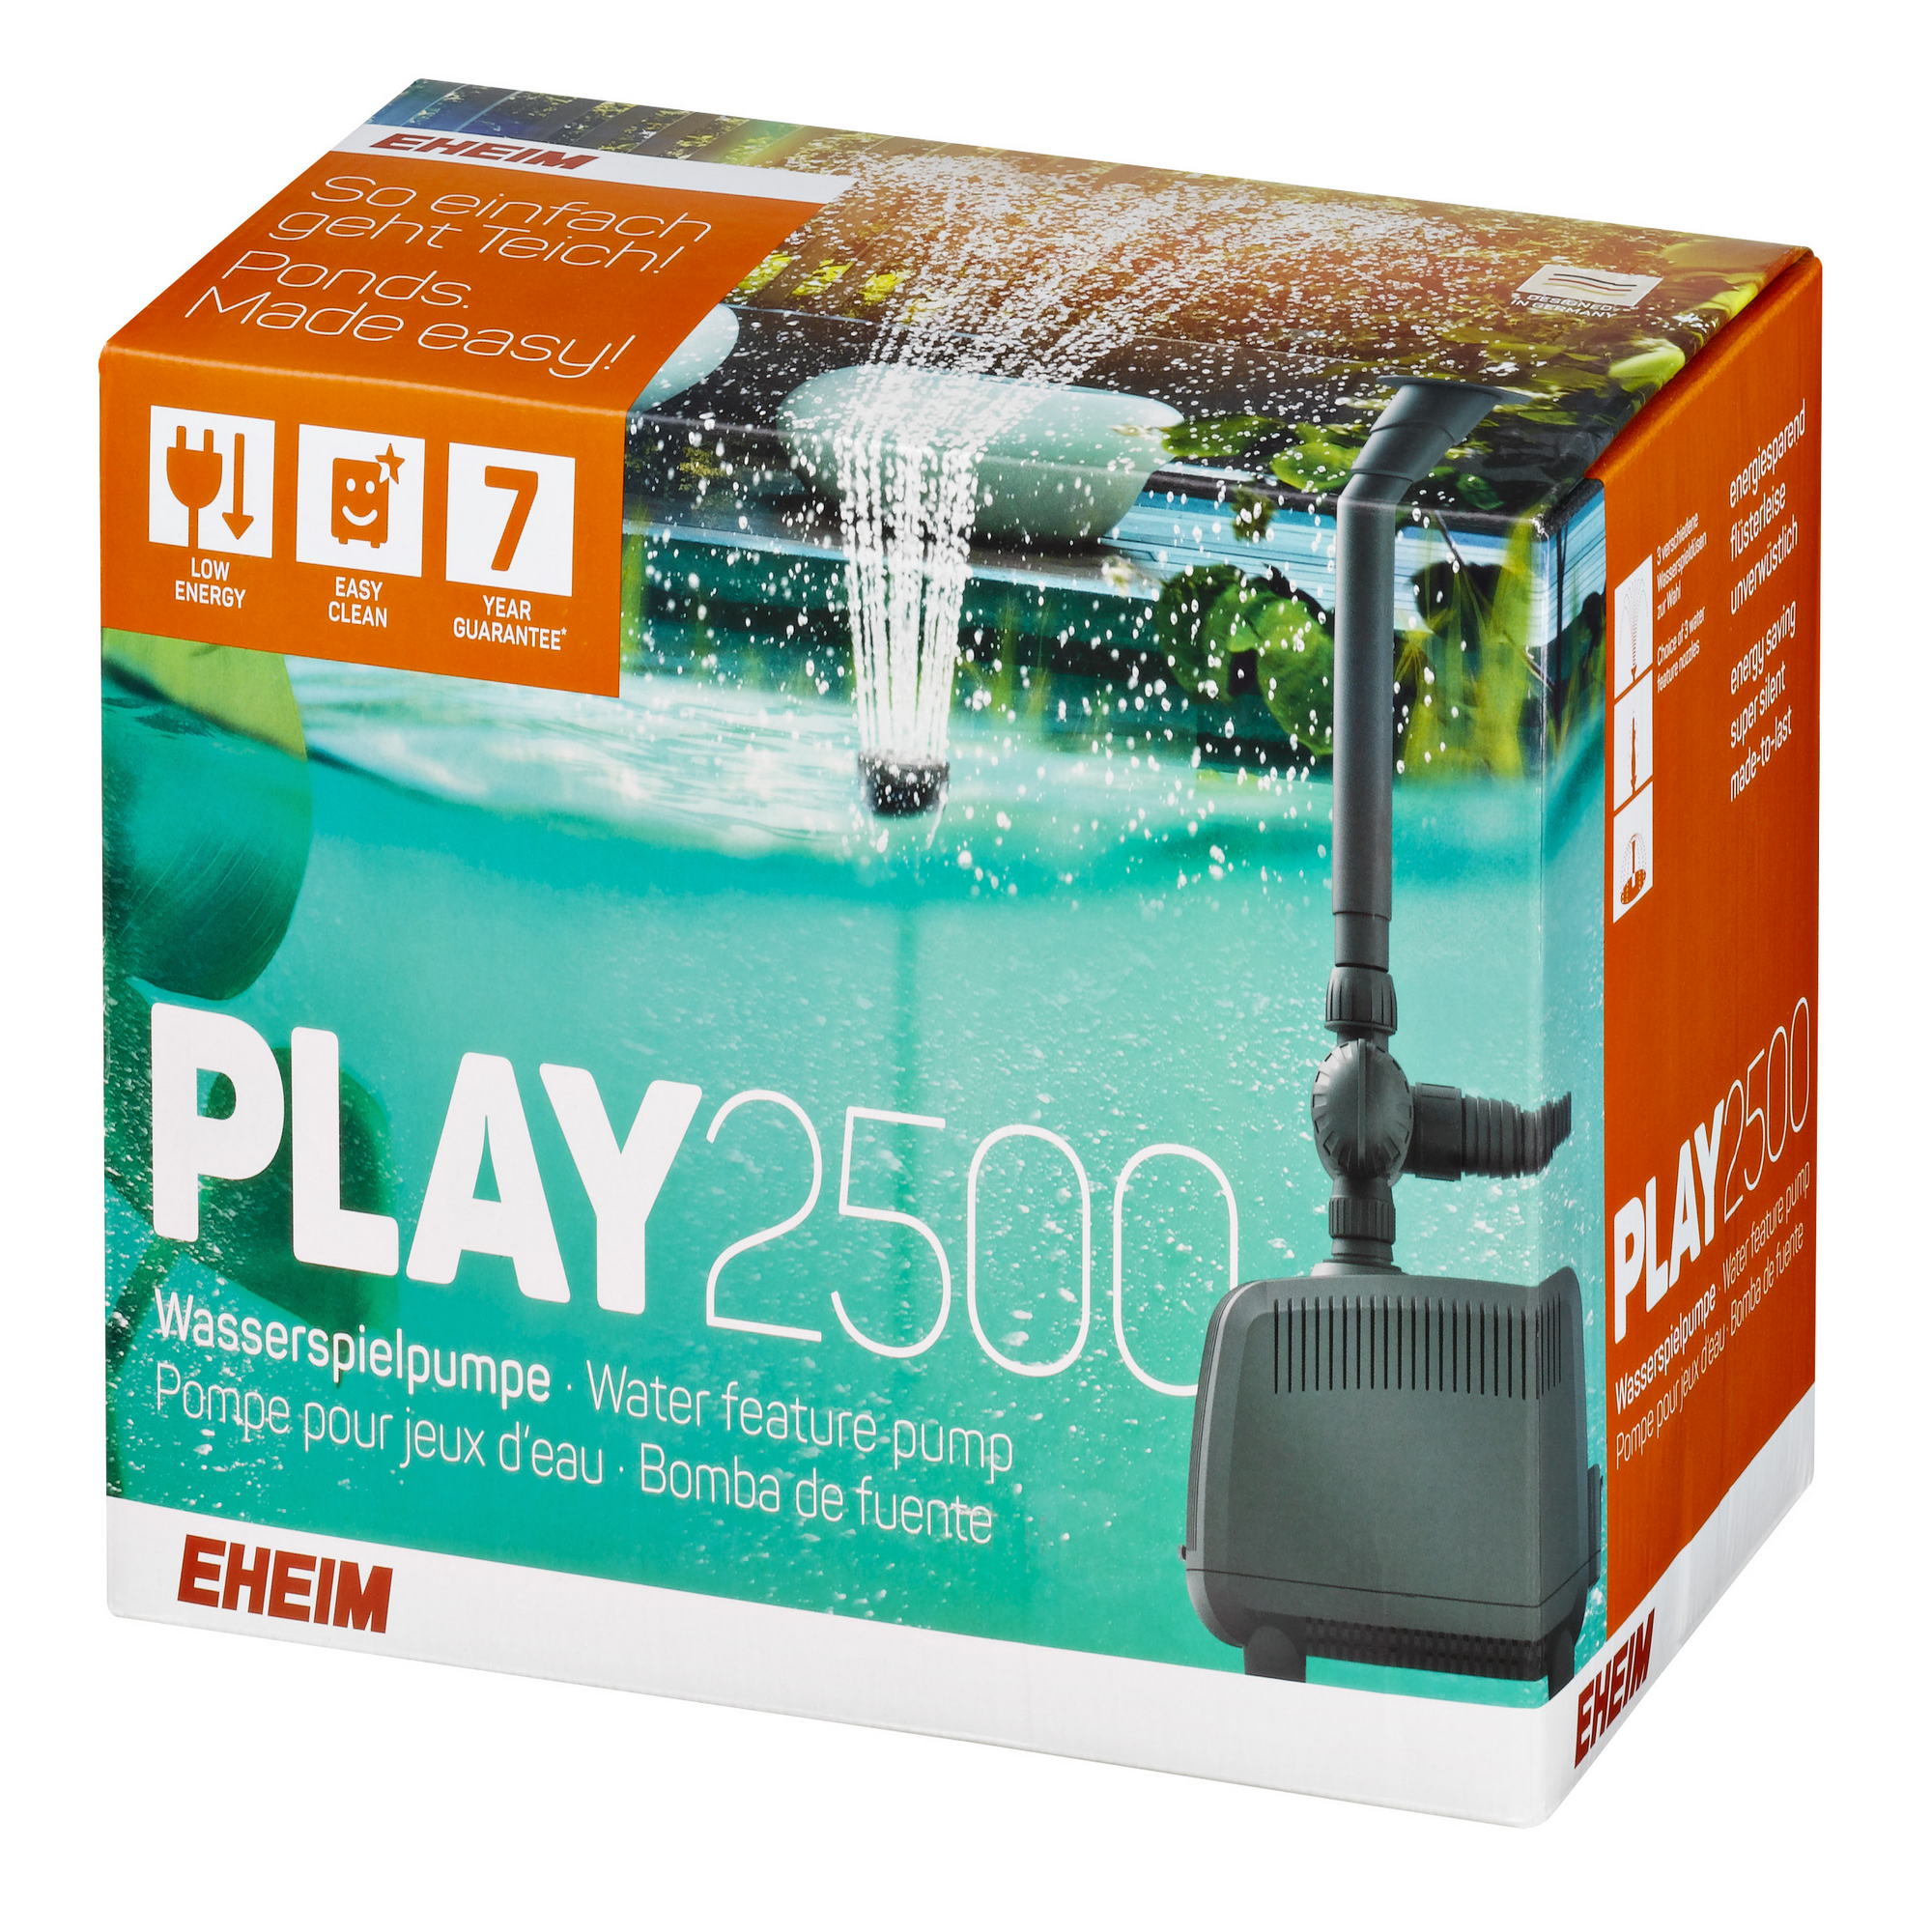 EHEIM PLAY 2500 Wasserspielpumpe + product picture